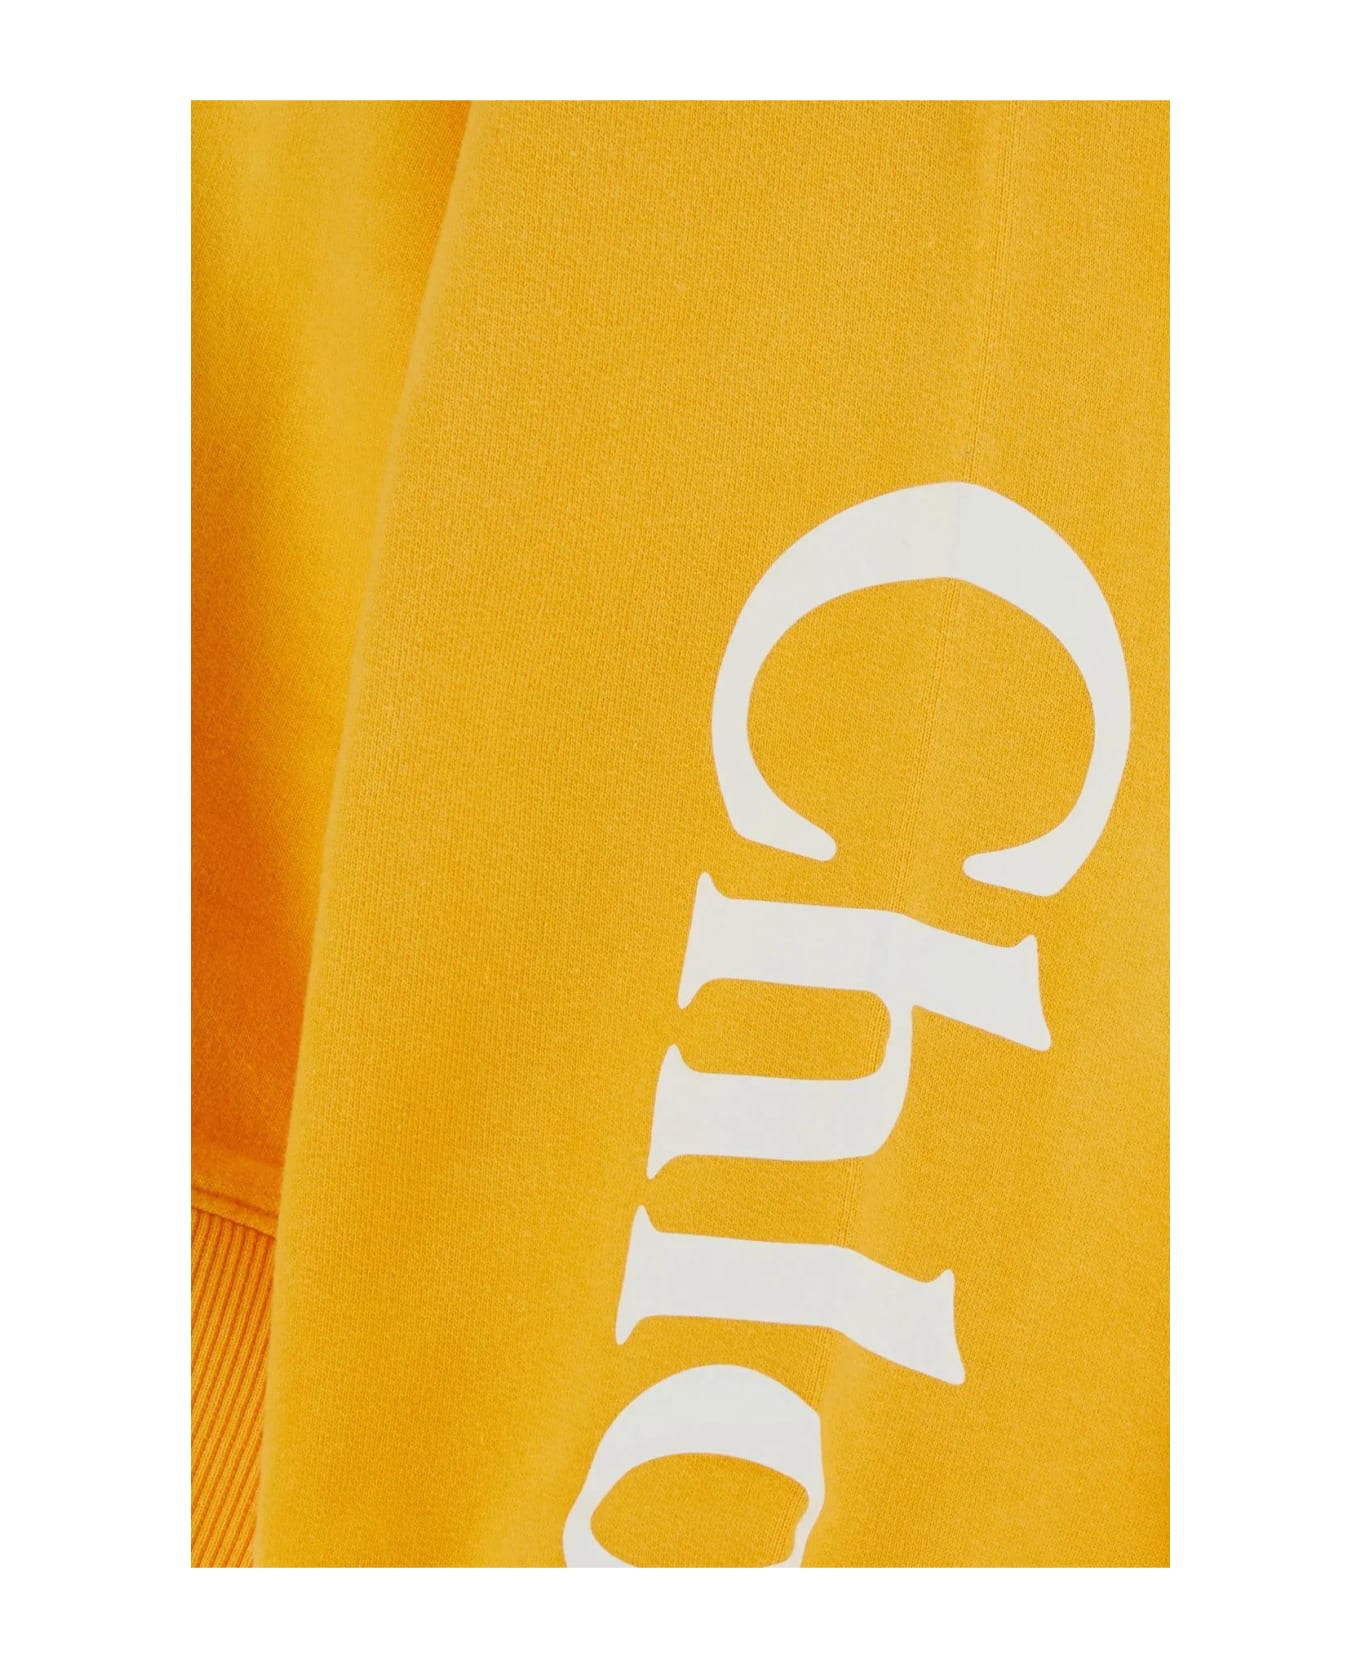 Chloé Cotton Oversize Sweatshirt - Multicolor フリース